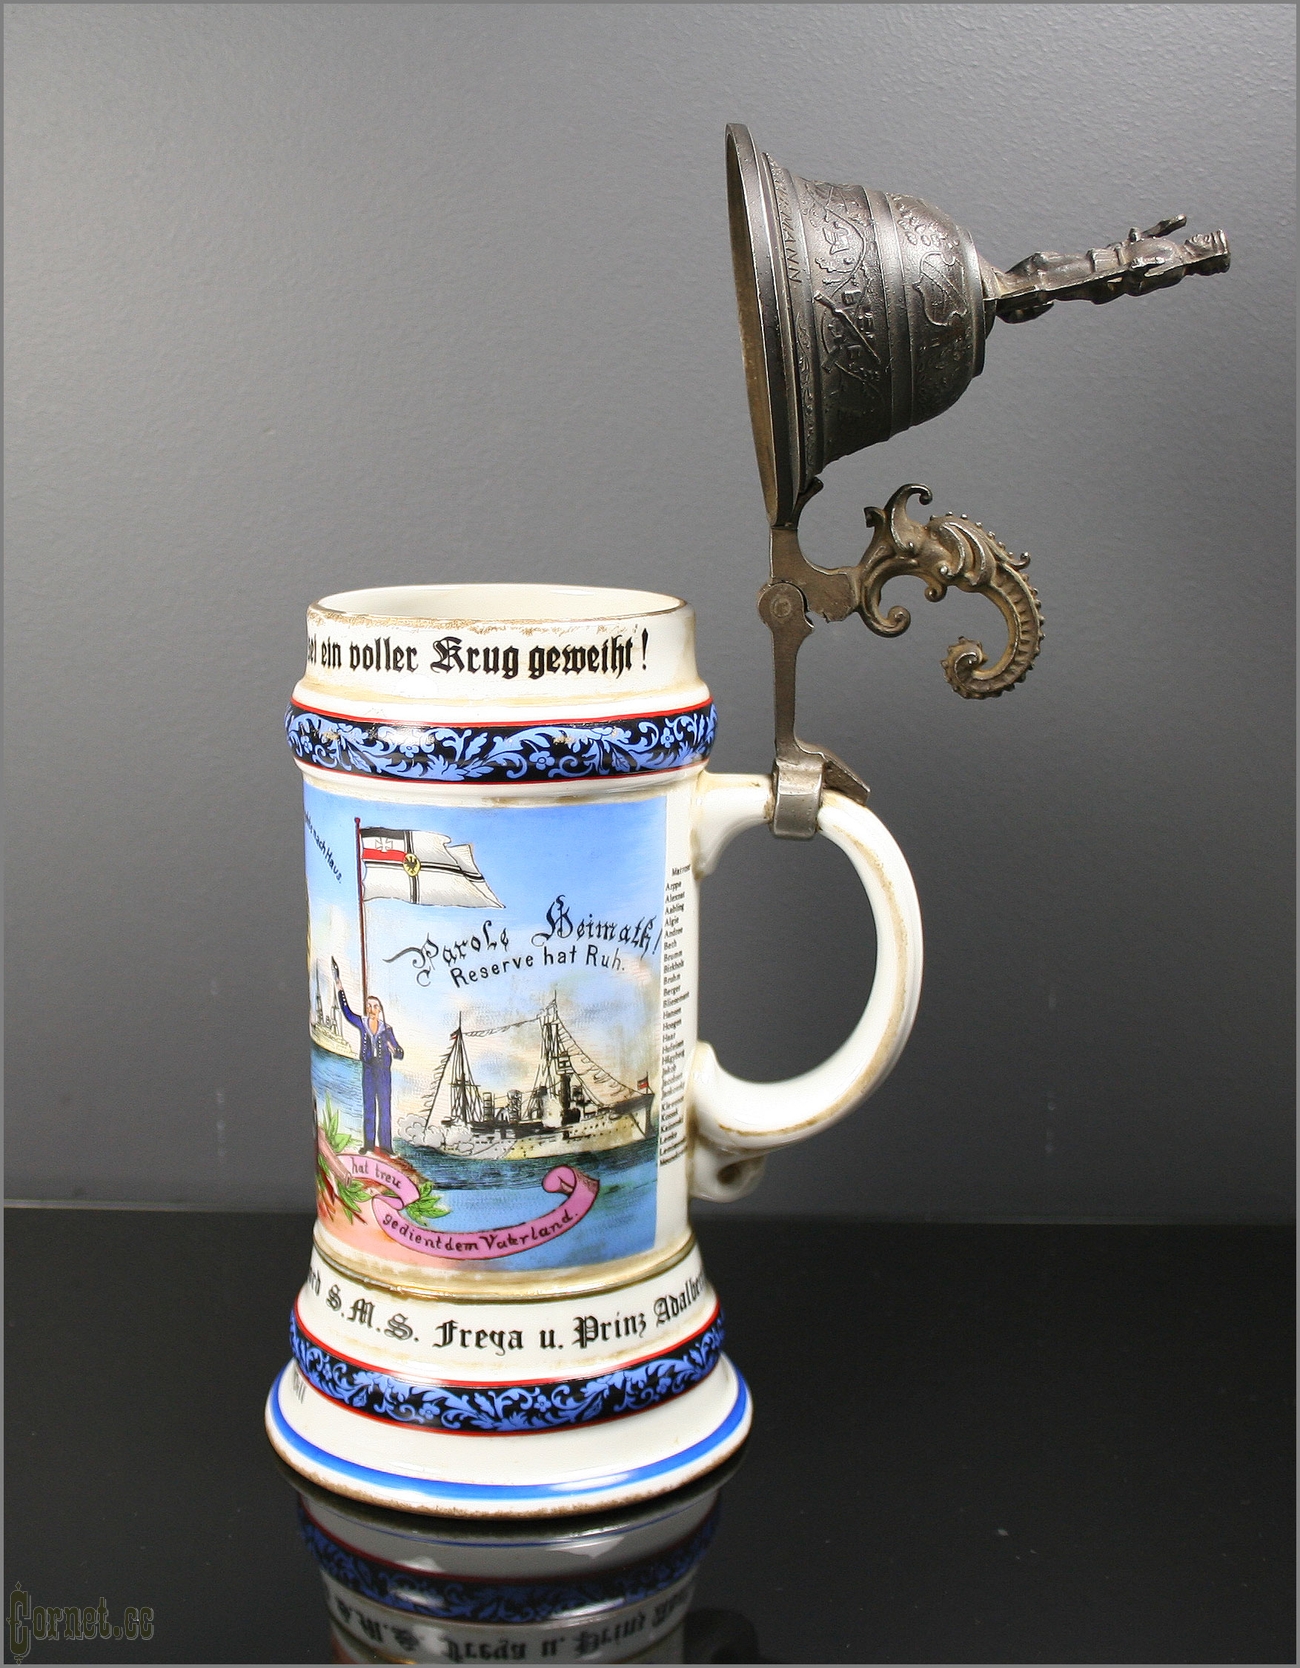 Beer mug in memory of service on the armored cruiser "Prince Adalbert"